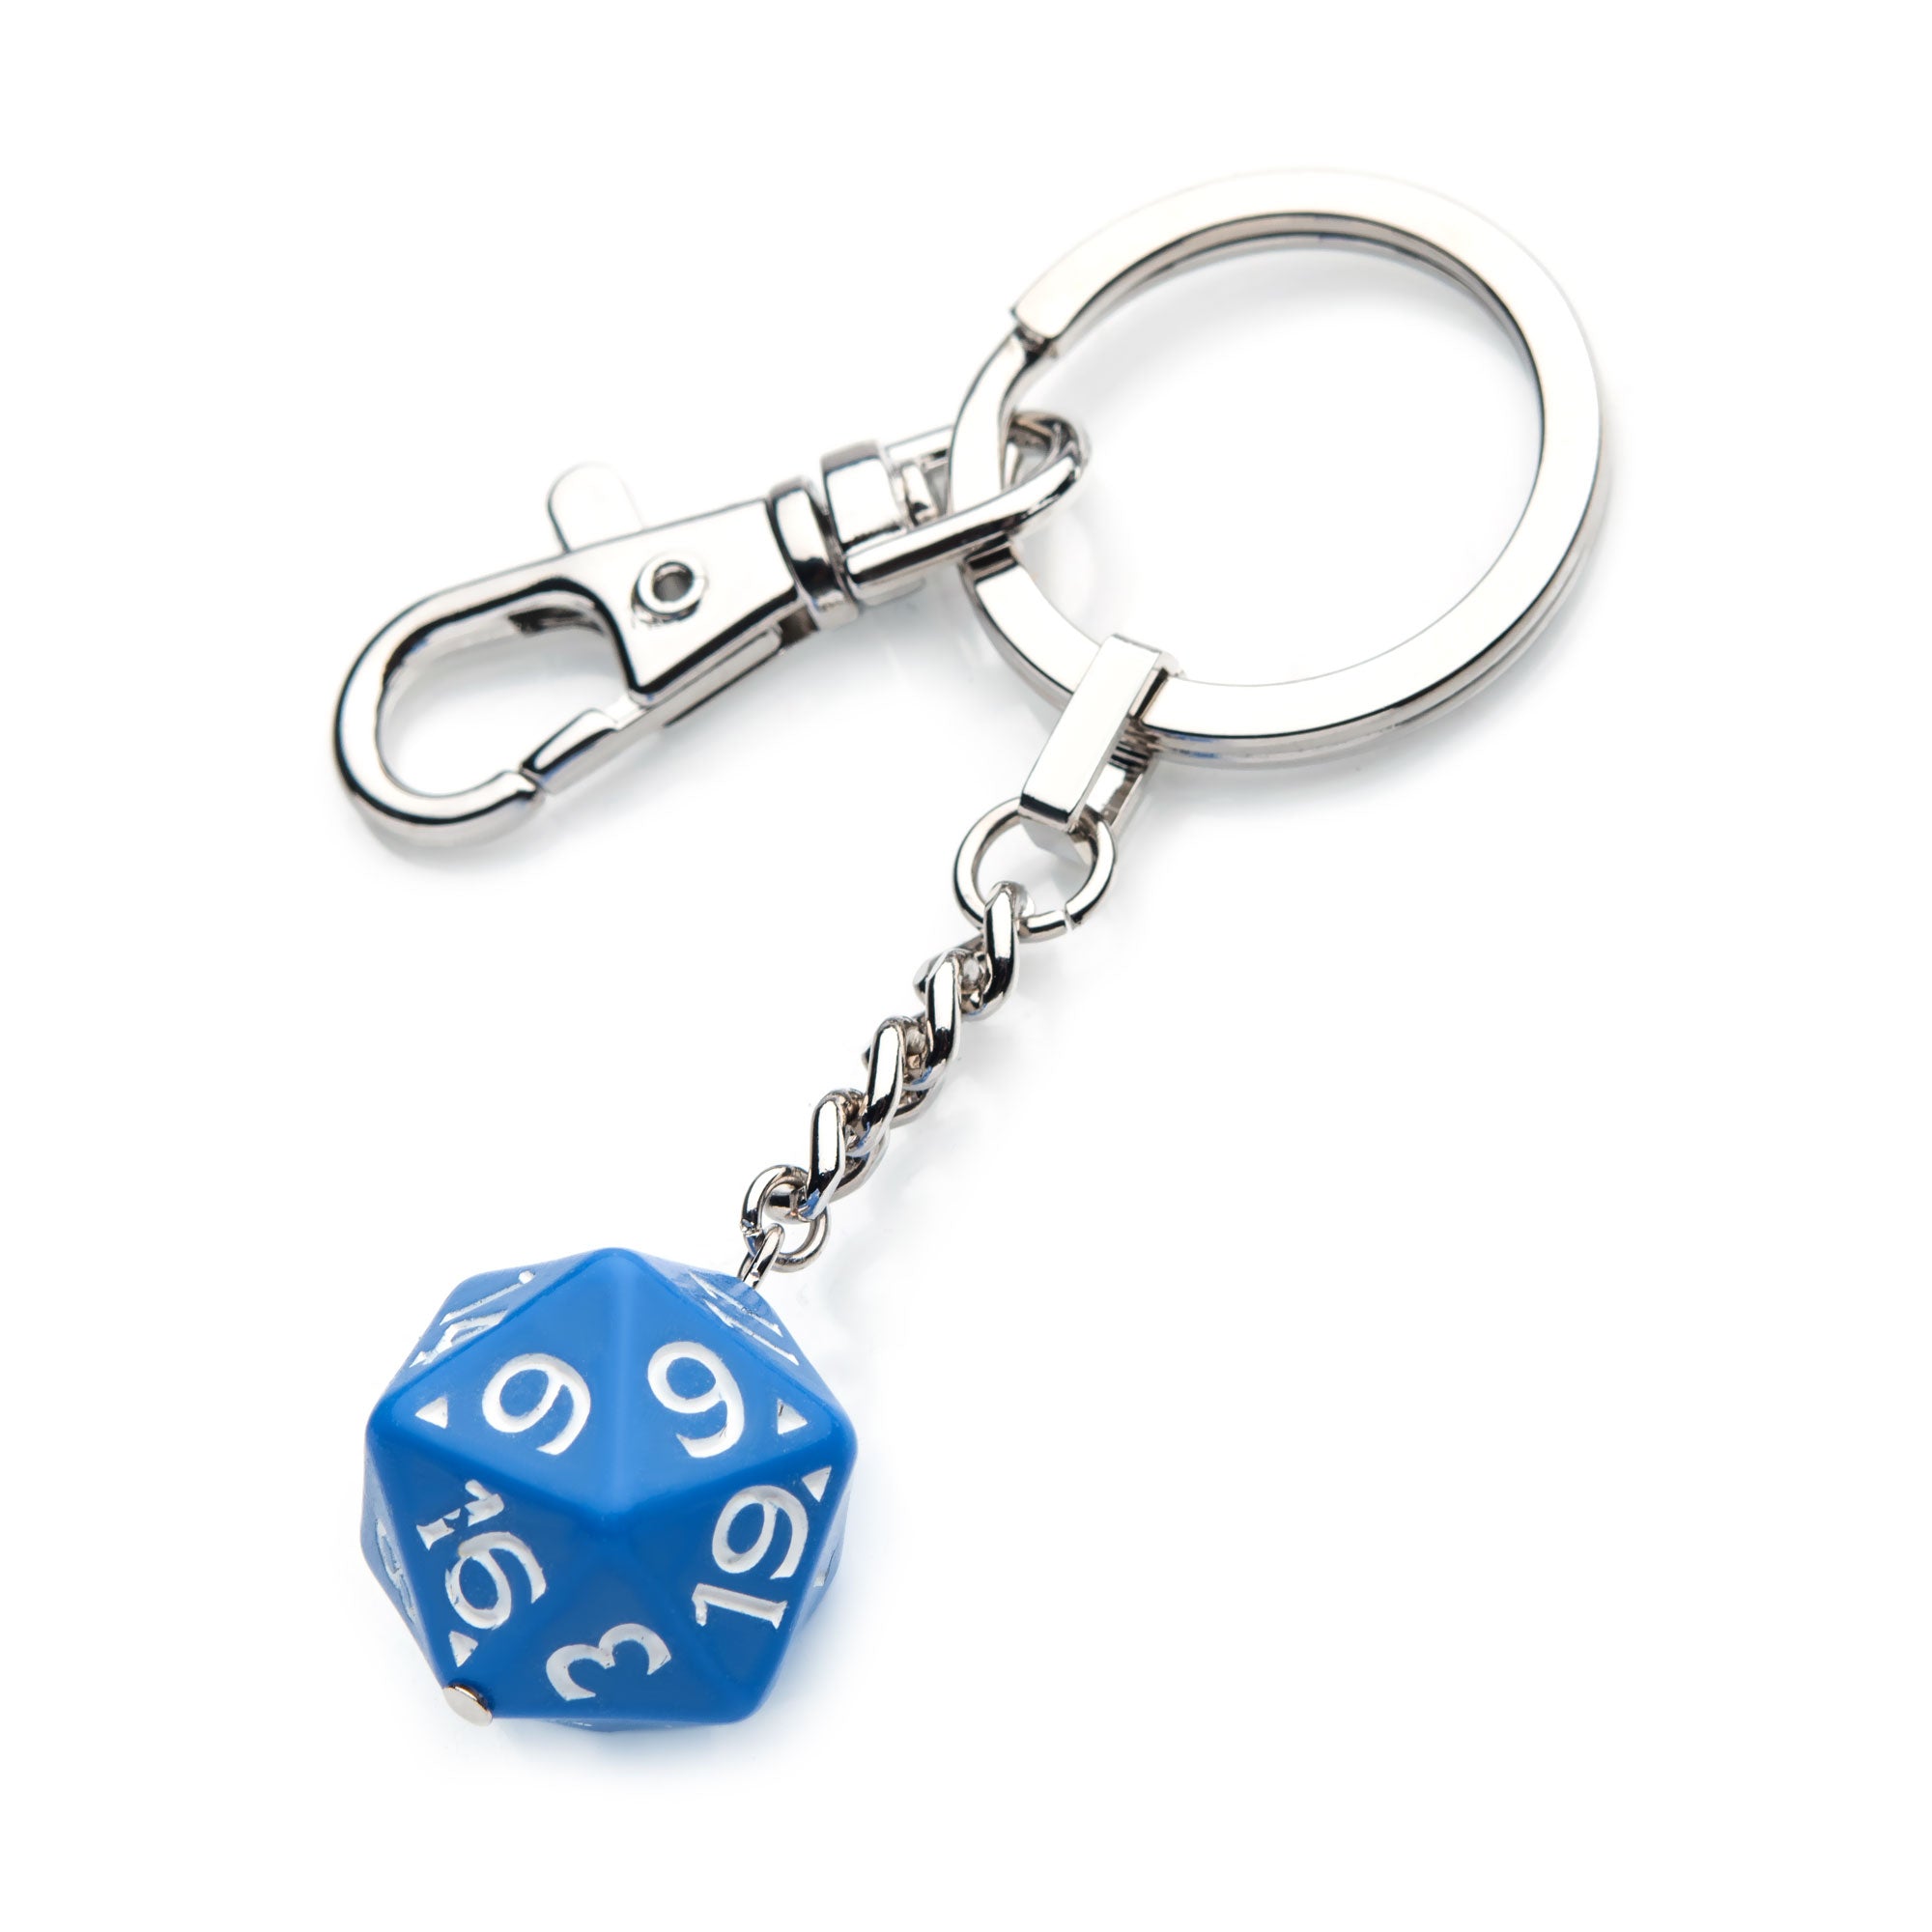 Blue dice key ring